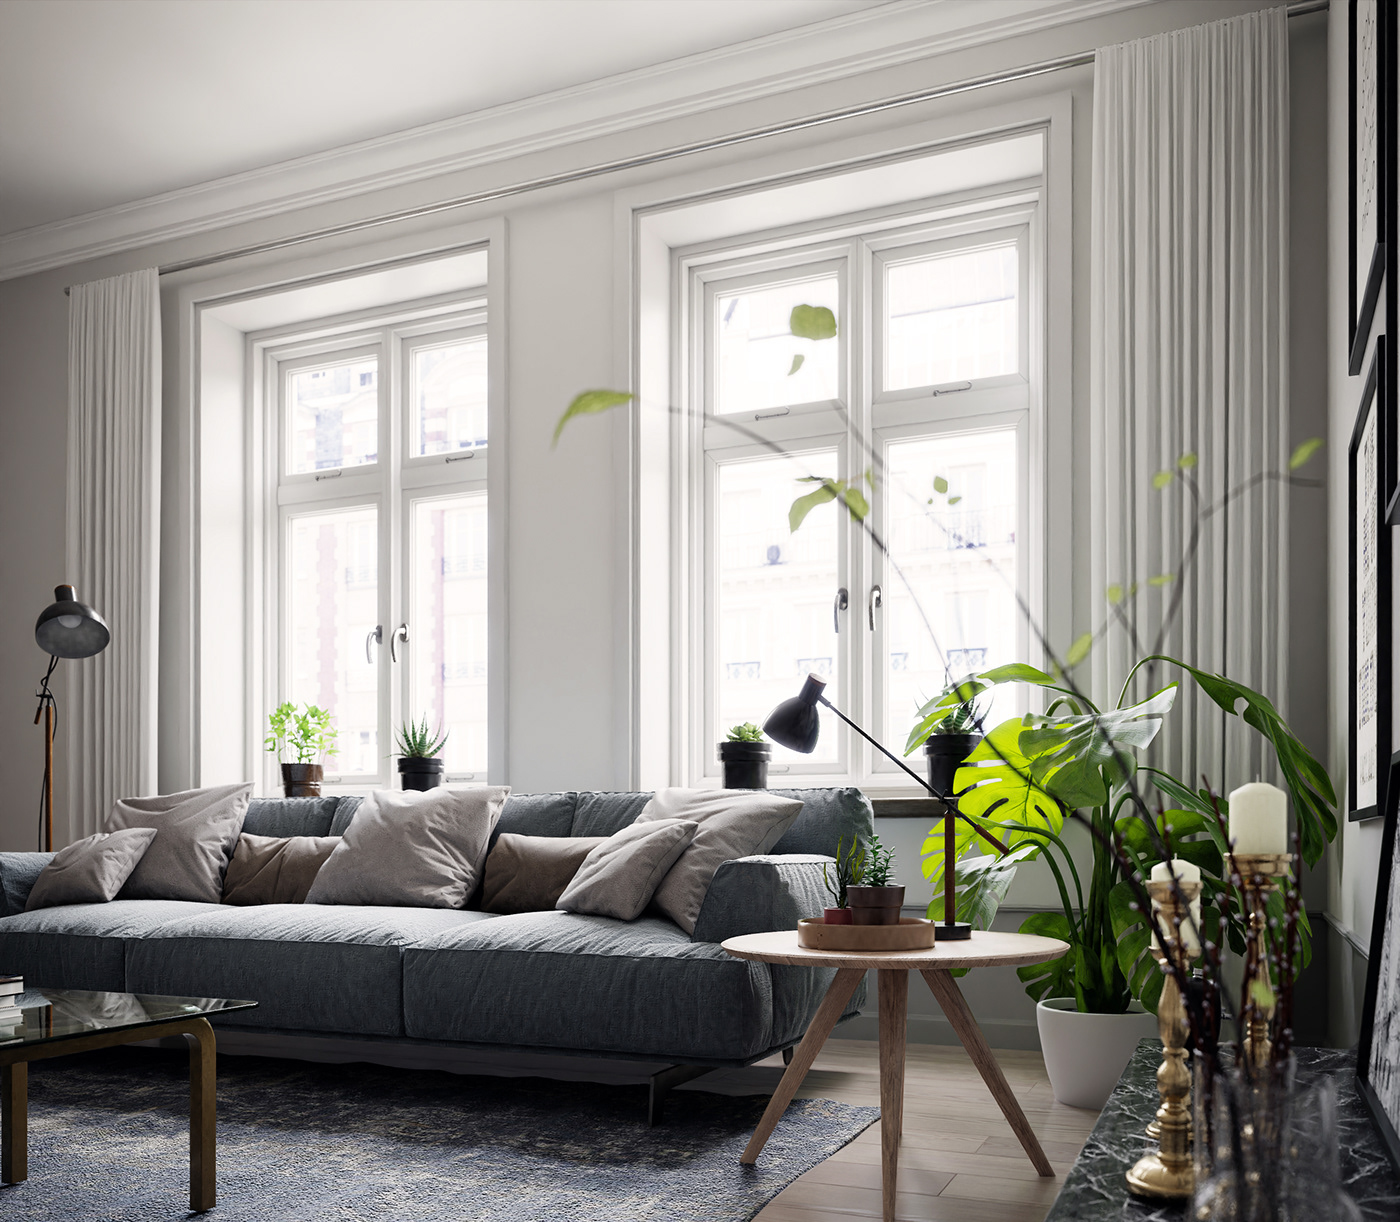 #interiordesign 3drendering architecturevisualization archviz Interior_rendering livingroomdesign scandinavianstyle